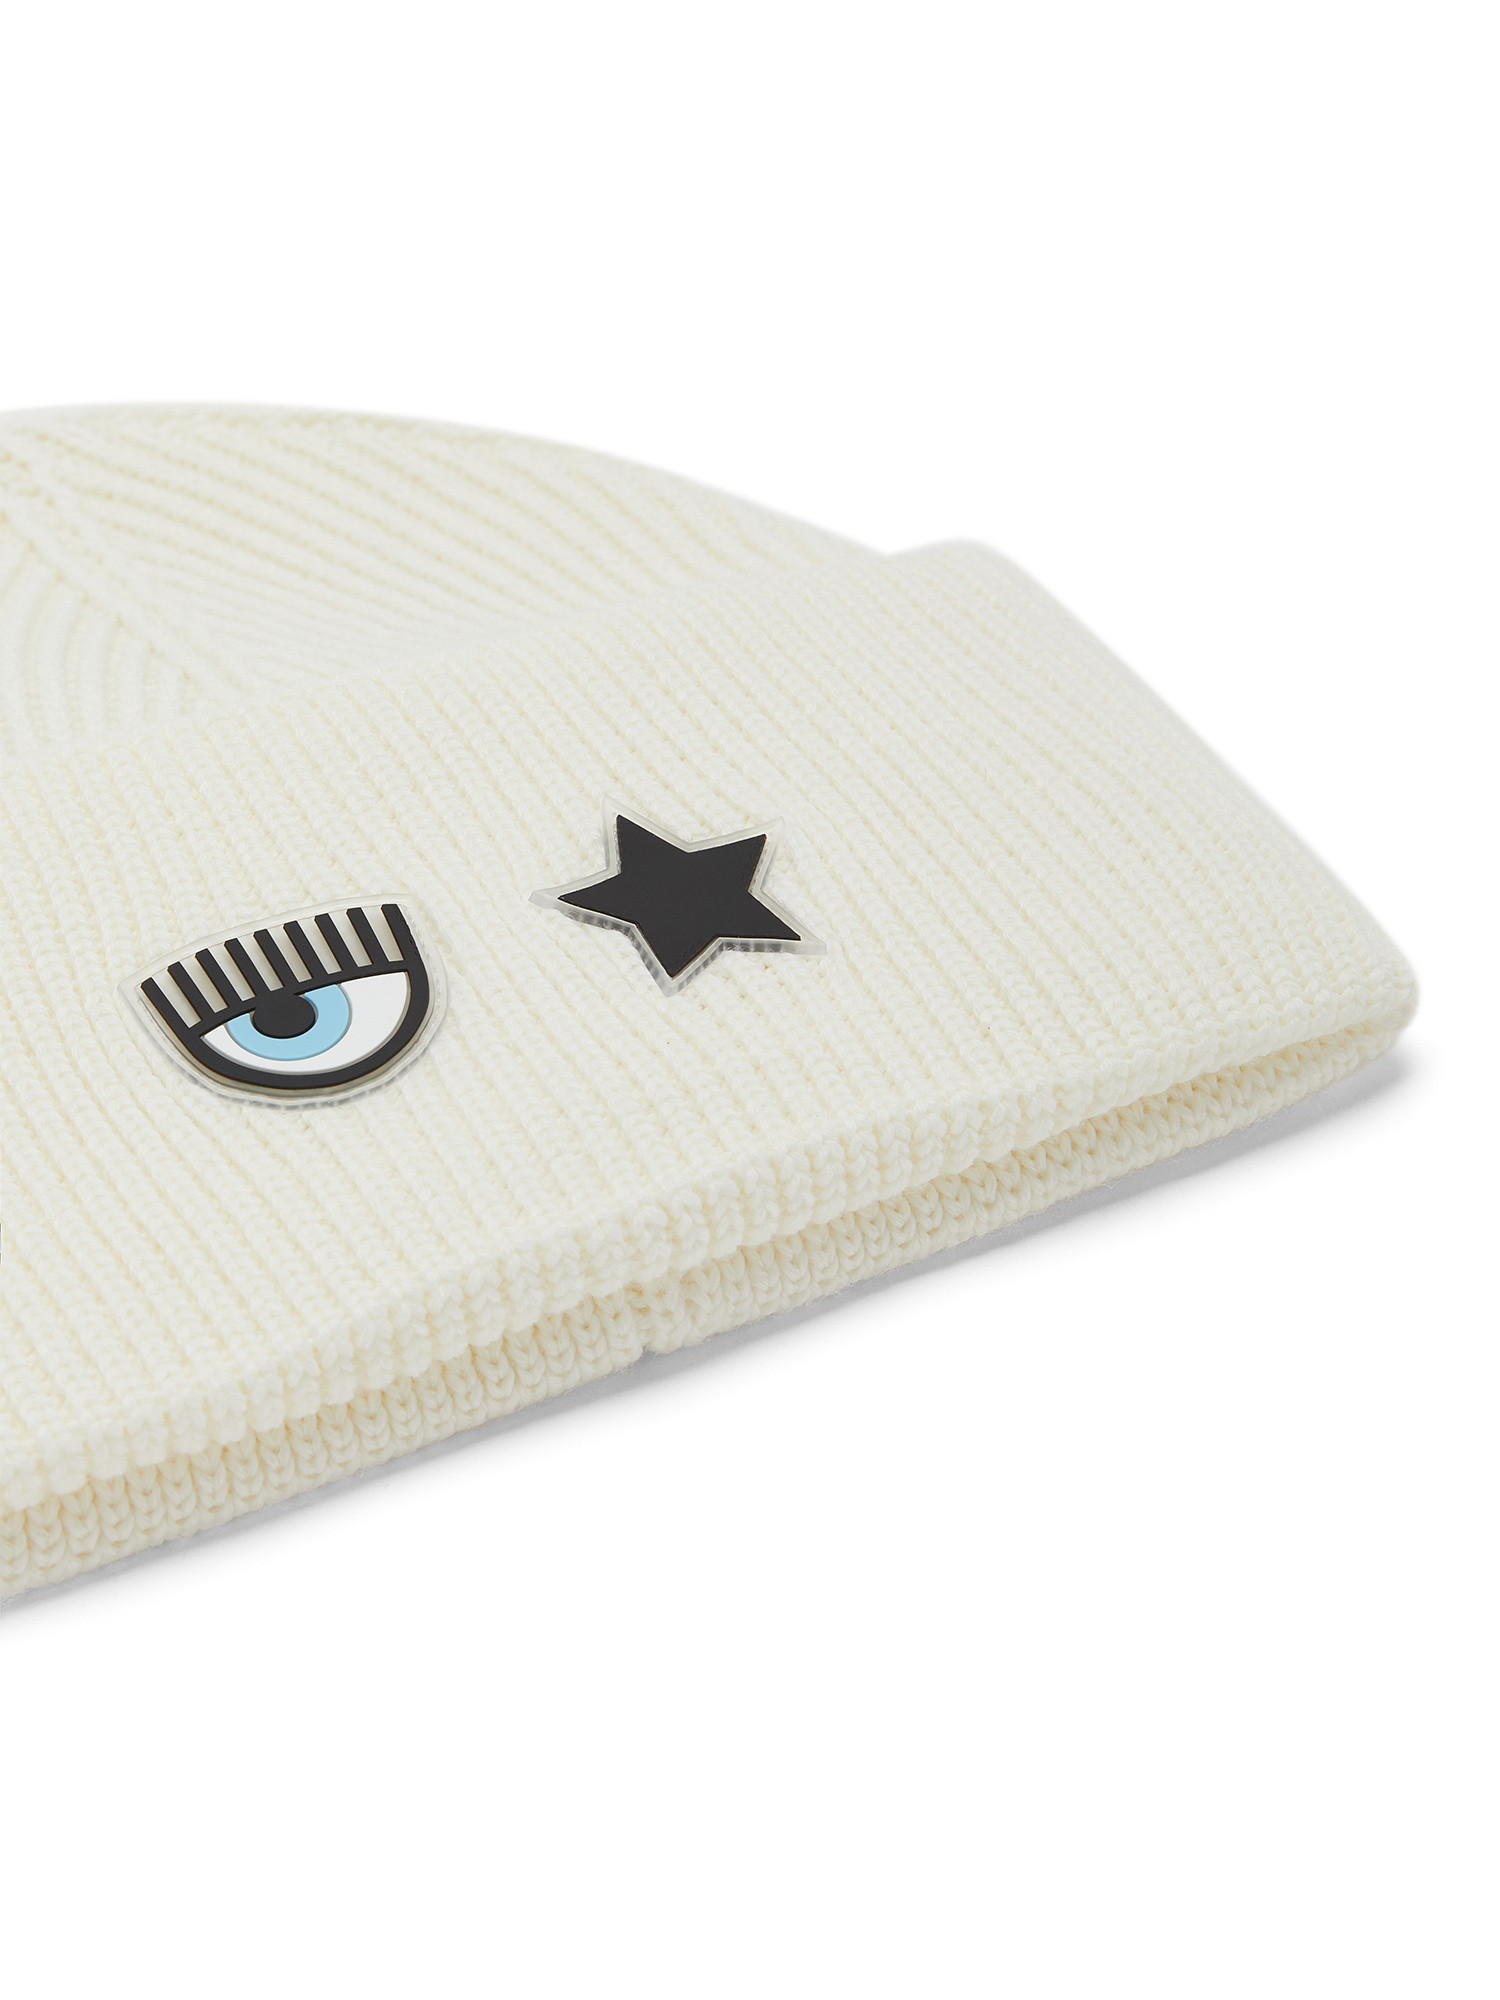 Chiara Ferragni - Beanie hat with Eye Star logo, White, large image number 1